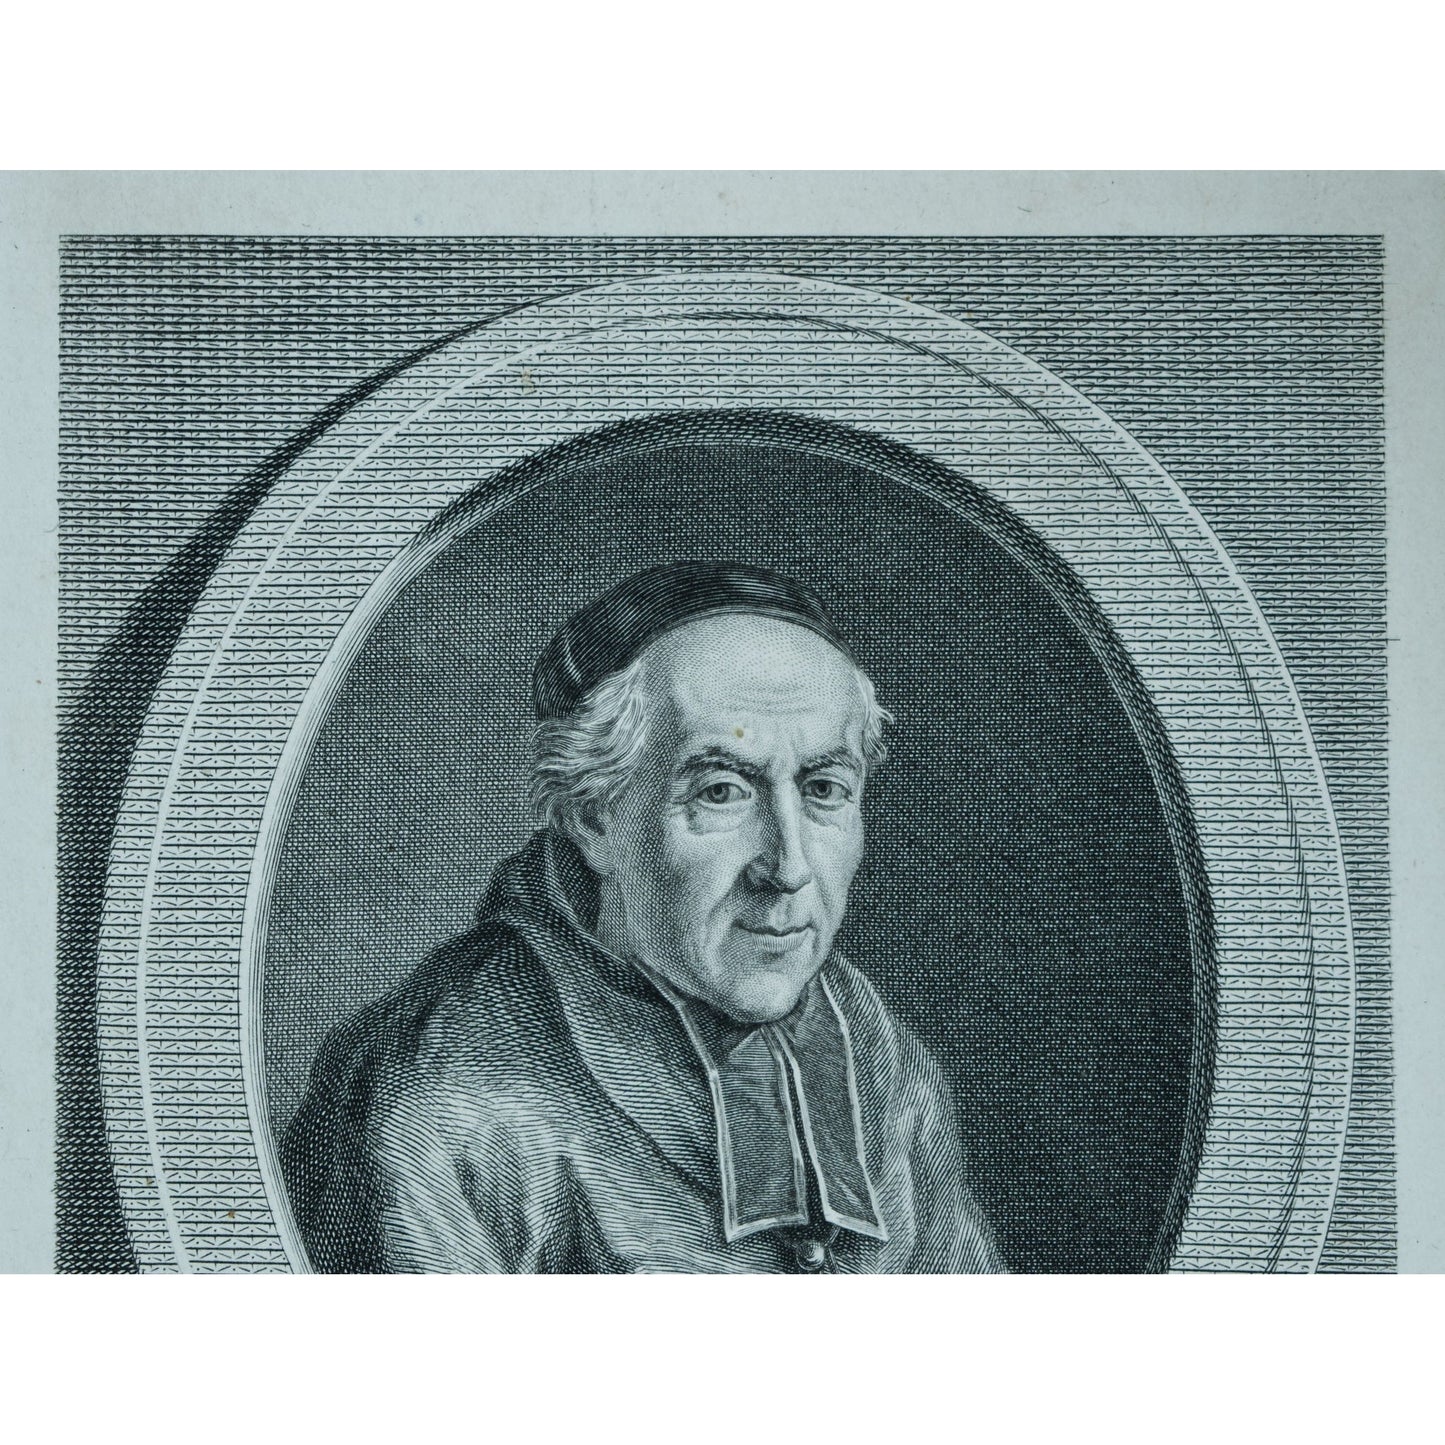 Vincenzio Vangelisti (c. 1740-1798)